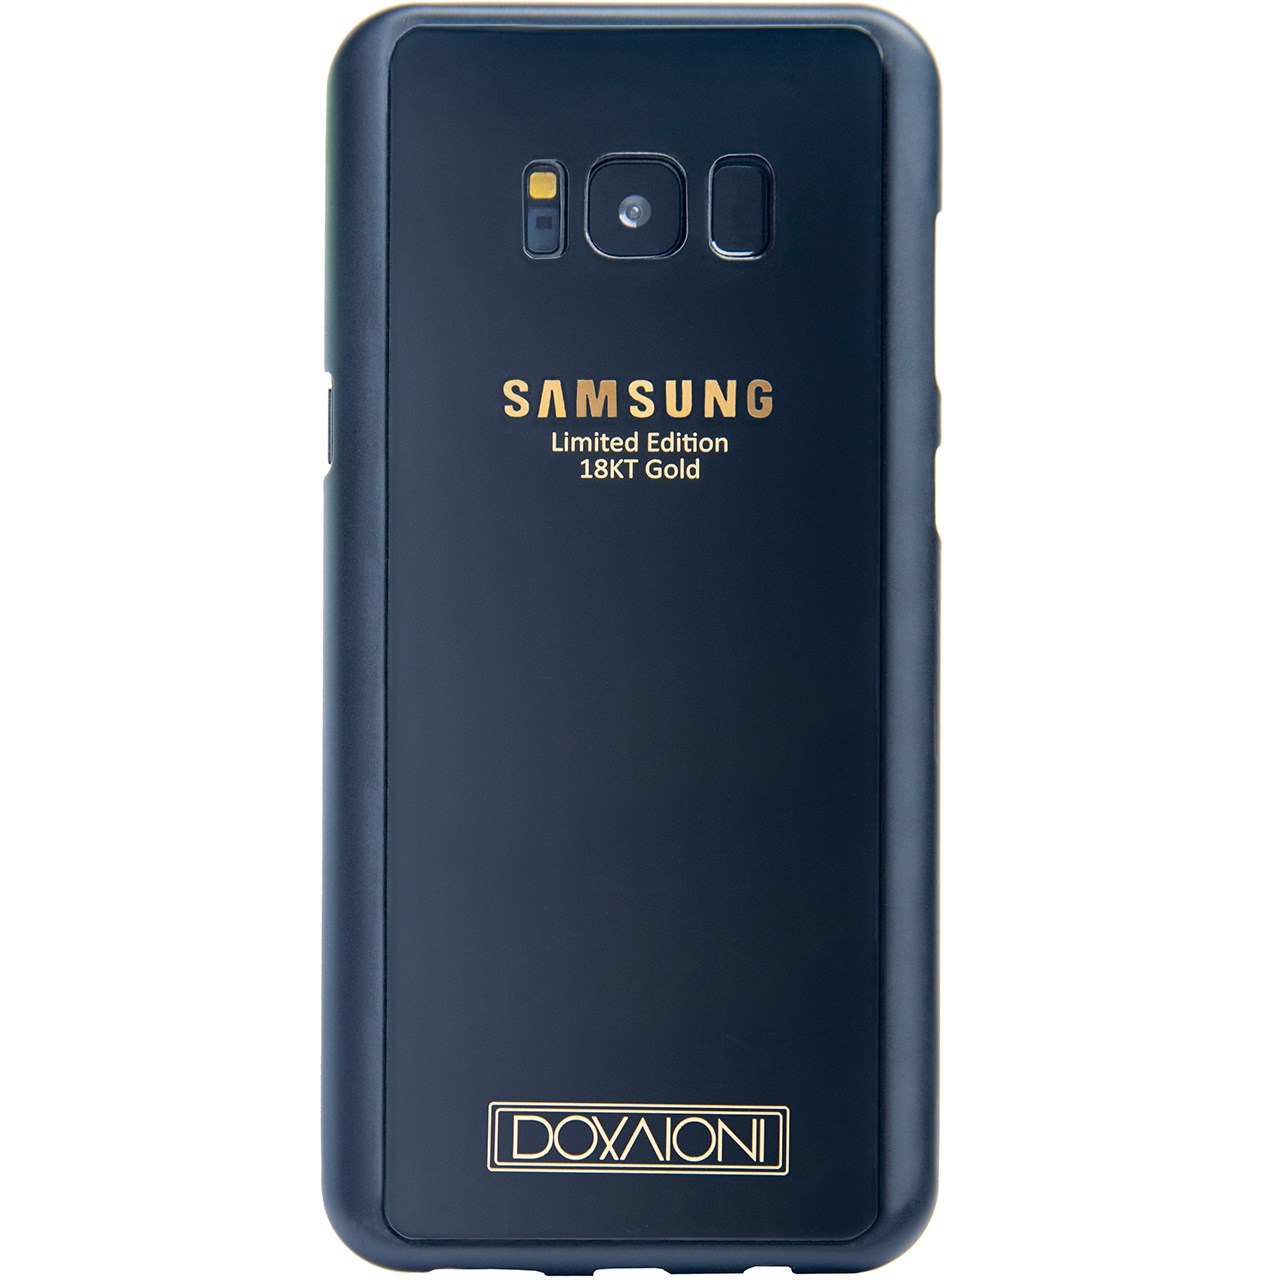 کاور طلا داکسیونی  سری Territory مناسب موبایل SAMSUNG Galaxy S8 Plus